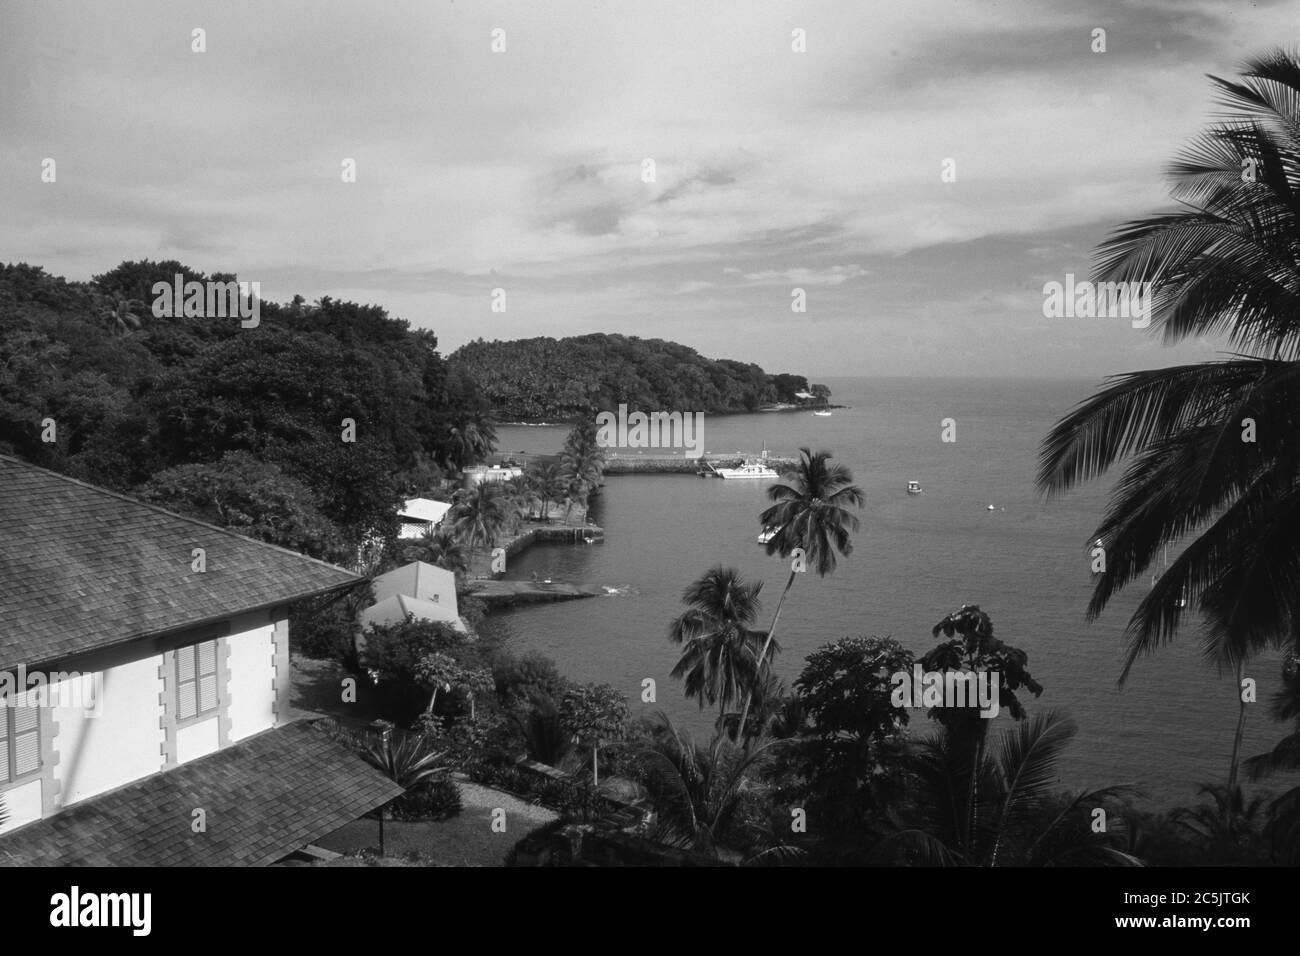 Guyane francese: Isola dei diavoli, prionieri politici, Papillion Movie, Legion étrangere, Foto Stock